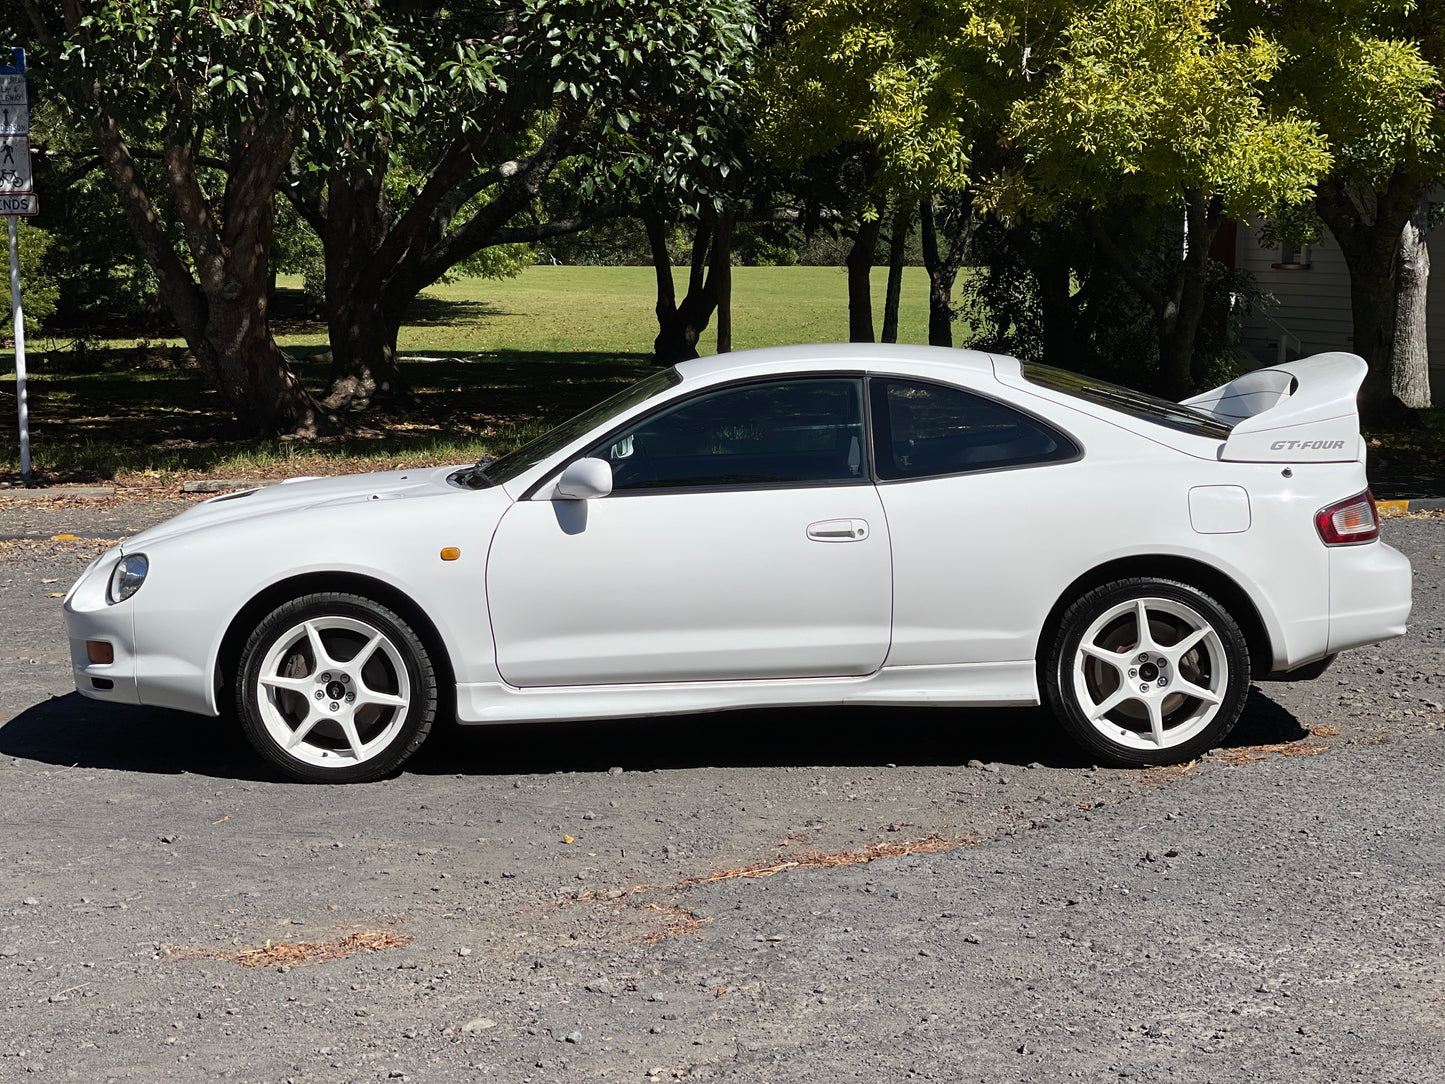 Toyota Celica GT4 - 1998